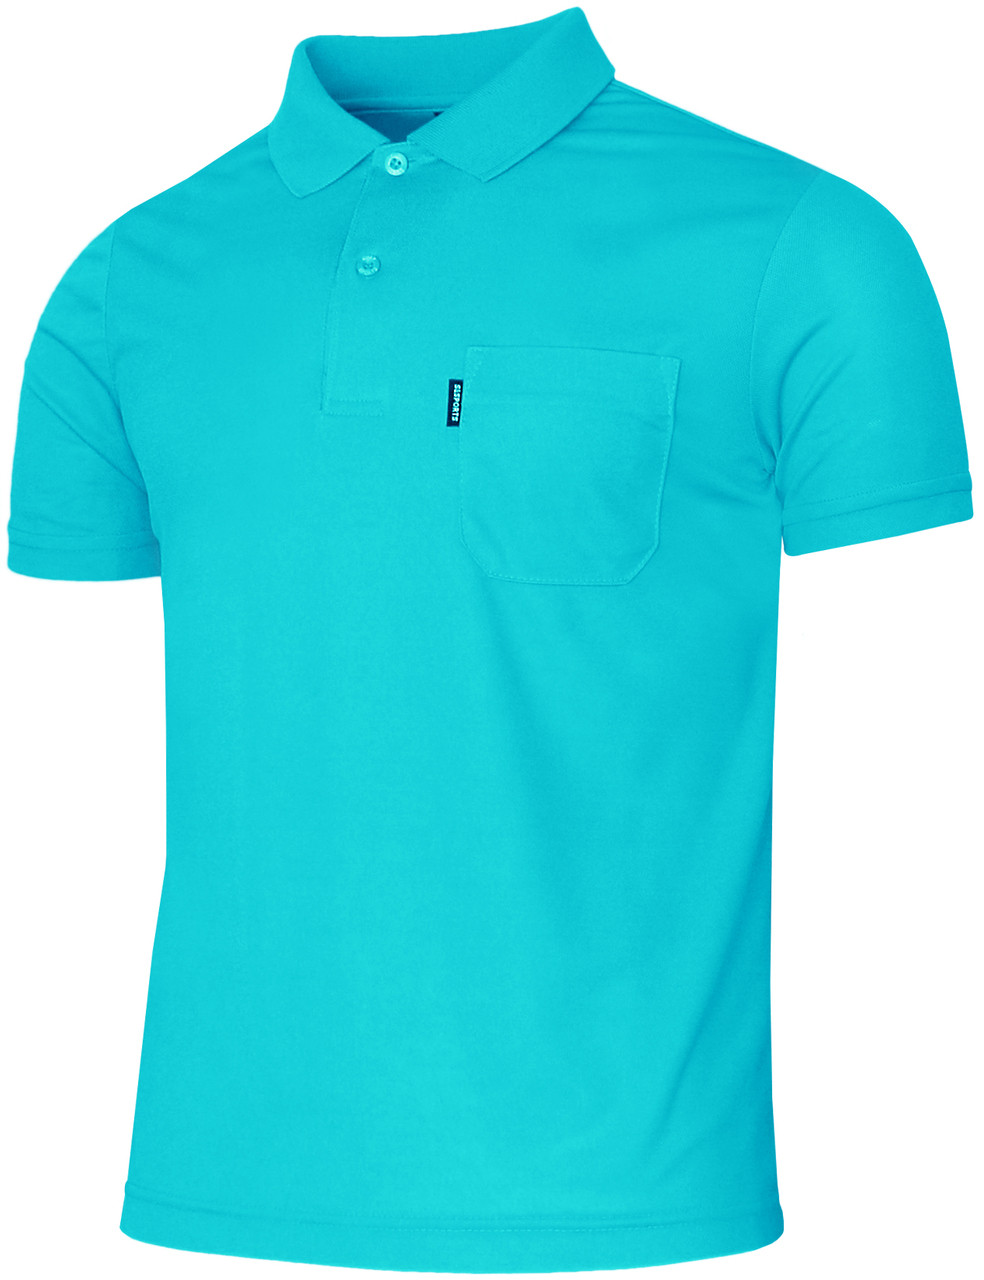 Coolon Polo t-shirt, short sleeve t-shirt, aqua t-shirt polo shirt ...